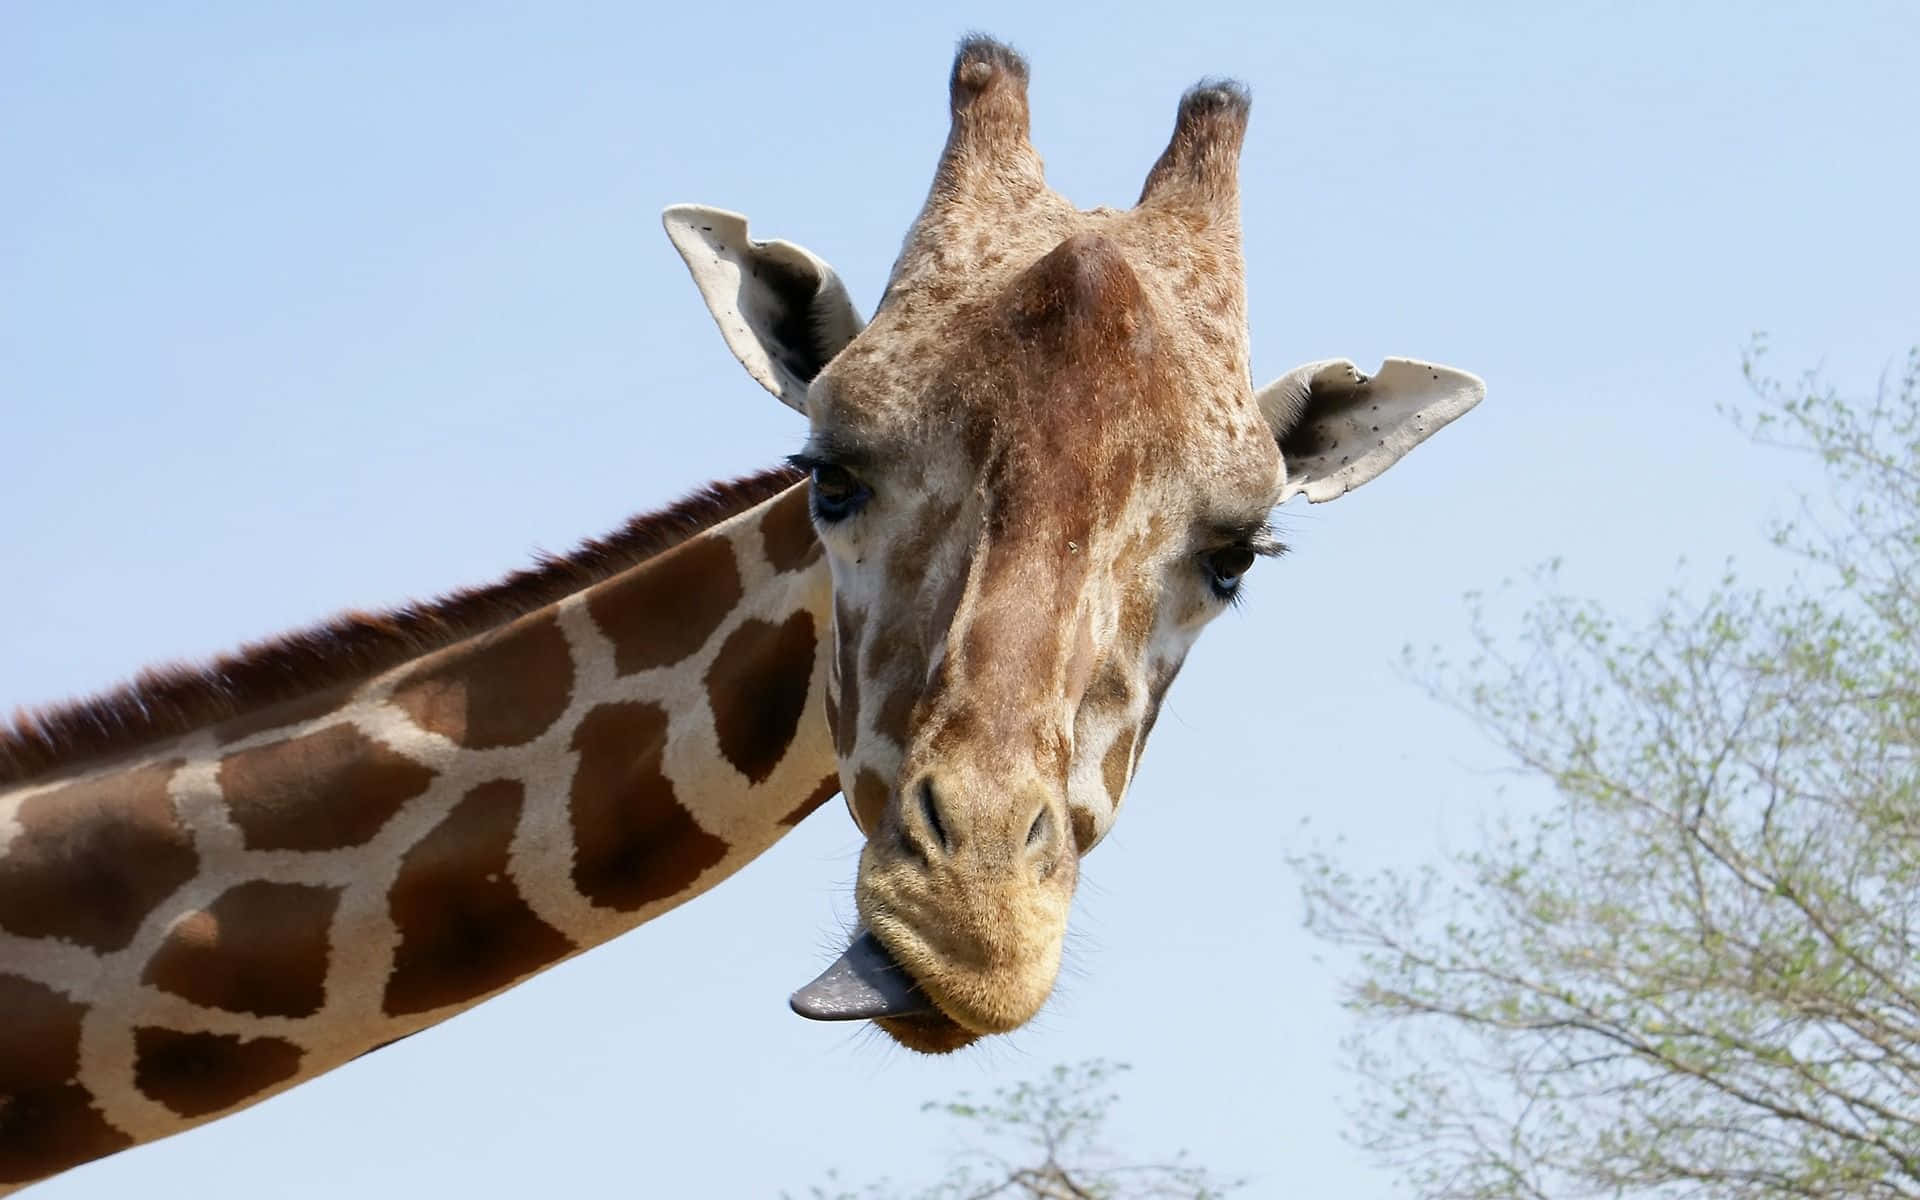 Hilarious Giraffe Eating a Snack Wallpaper